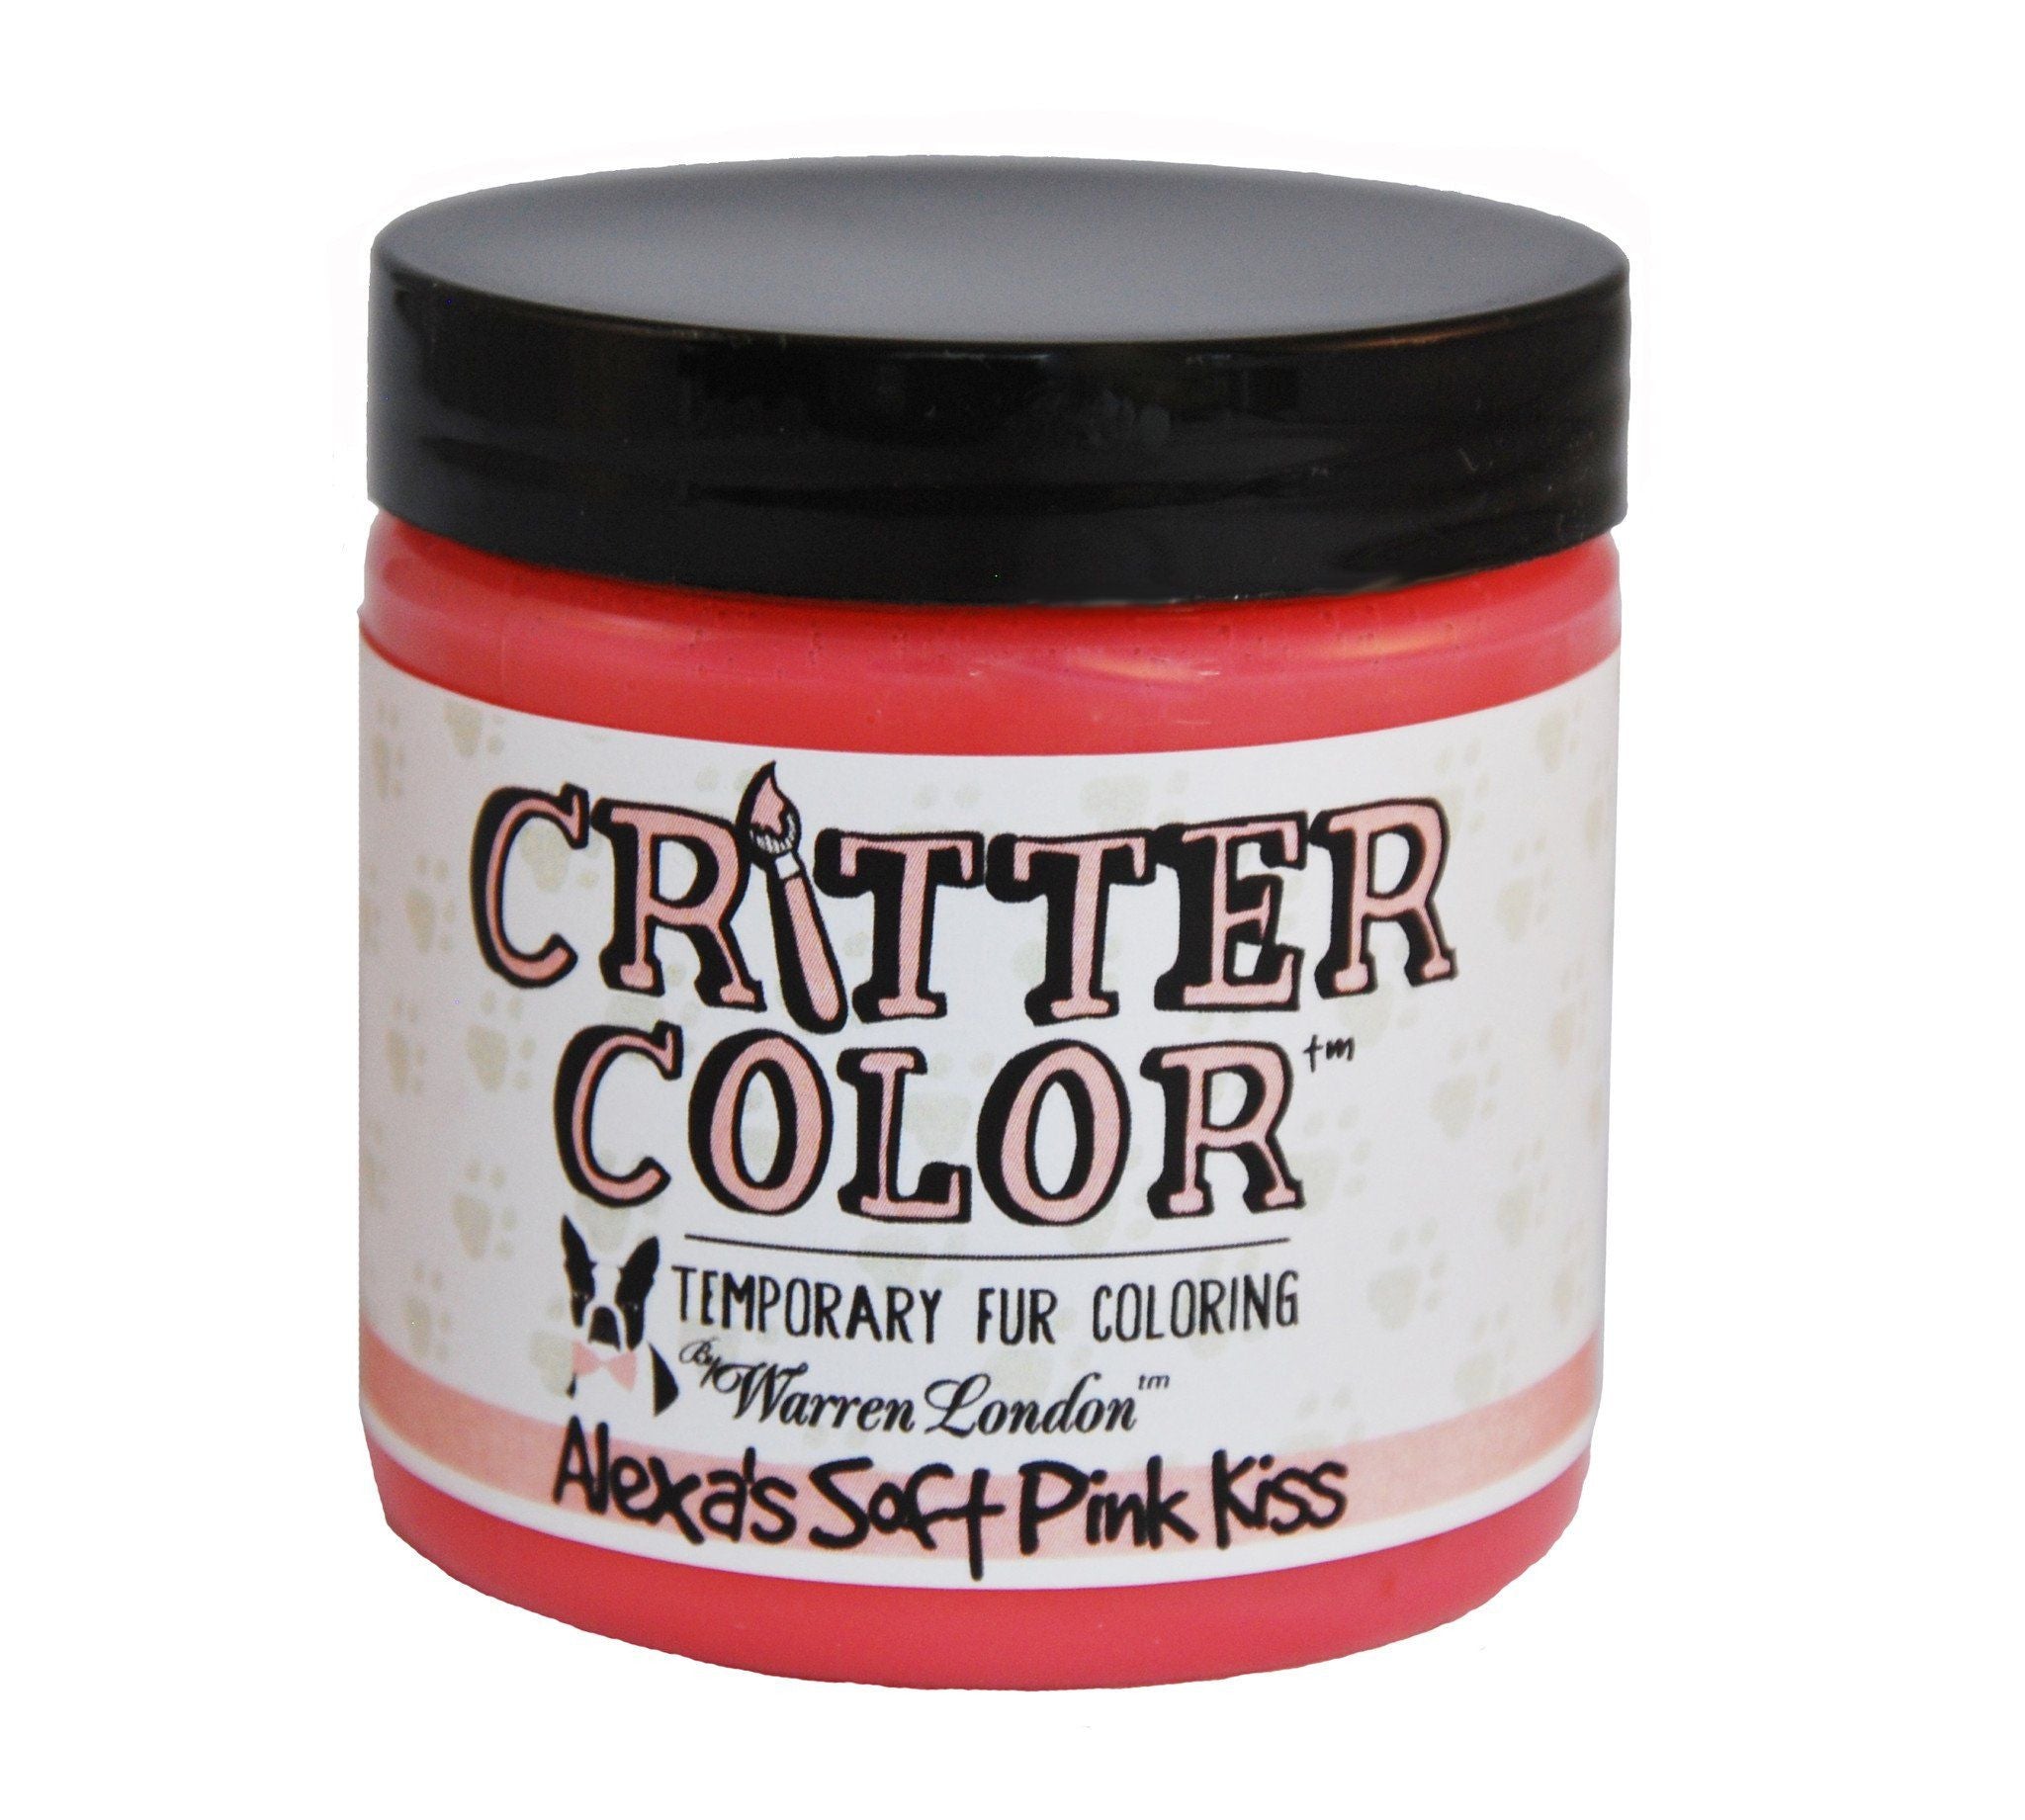 Critter Color - Temporary Pet Fur Coloring/Dog Dye Spa Product Warren London Alexa's Pink Kiss 